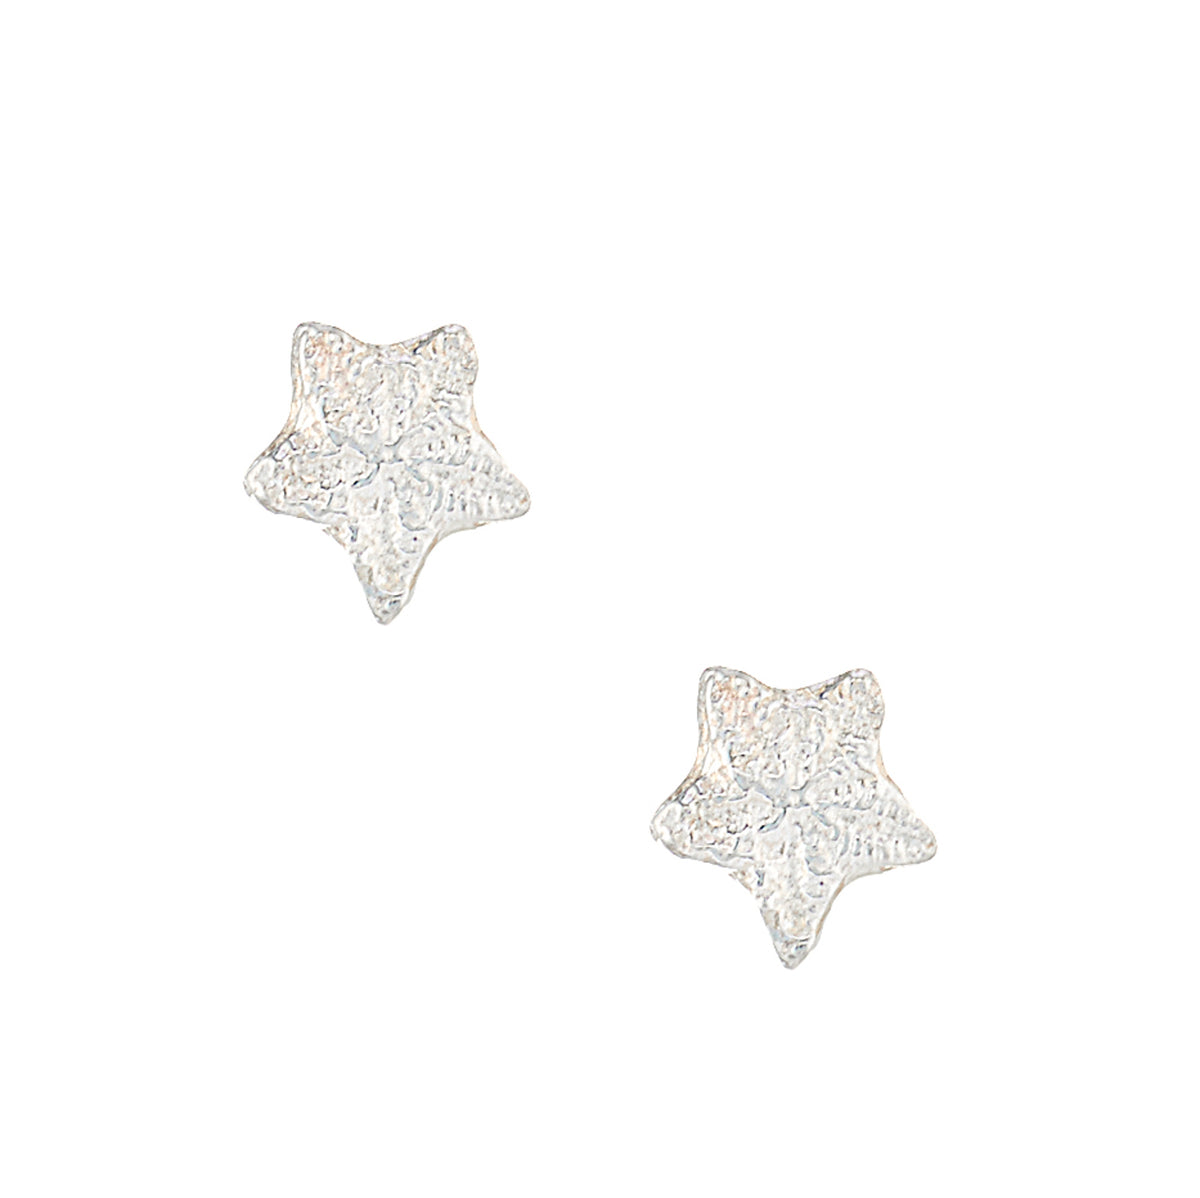 Crinoid star stud earrings